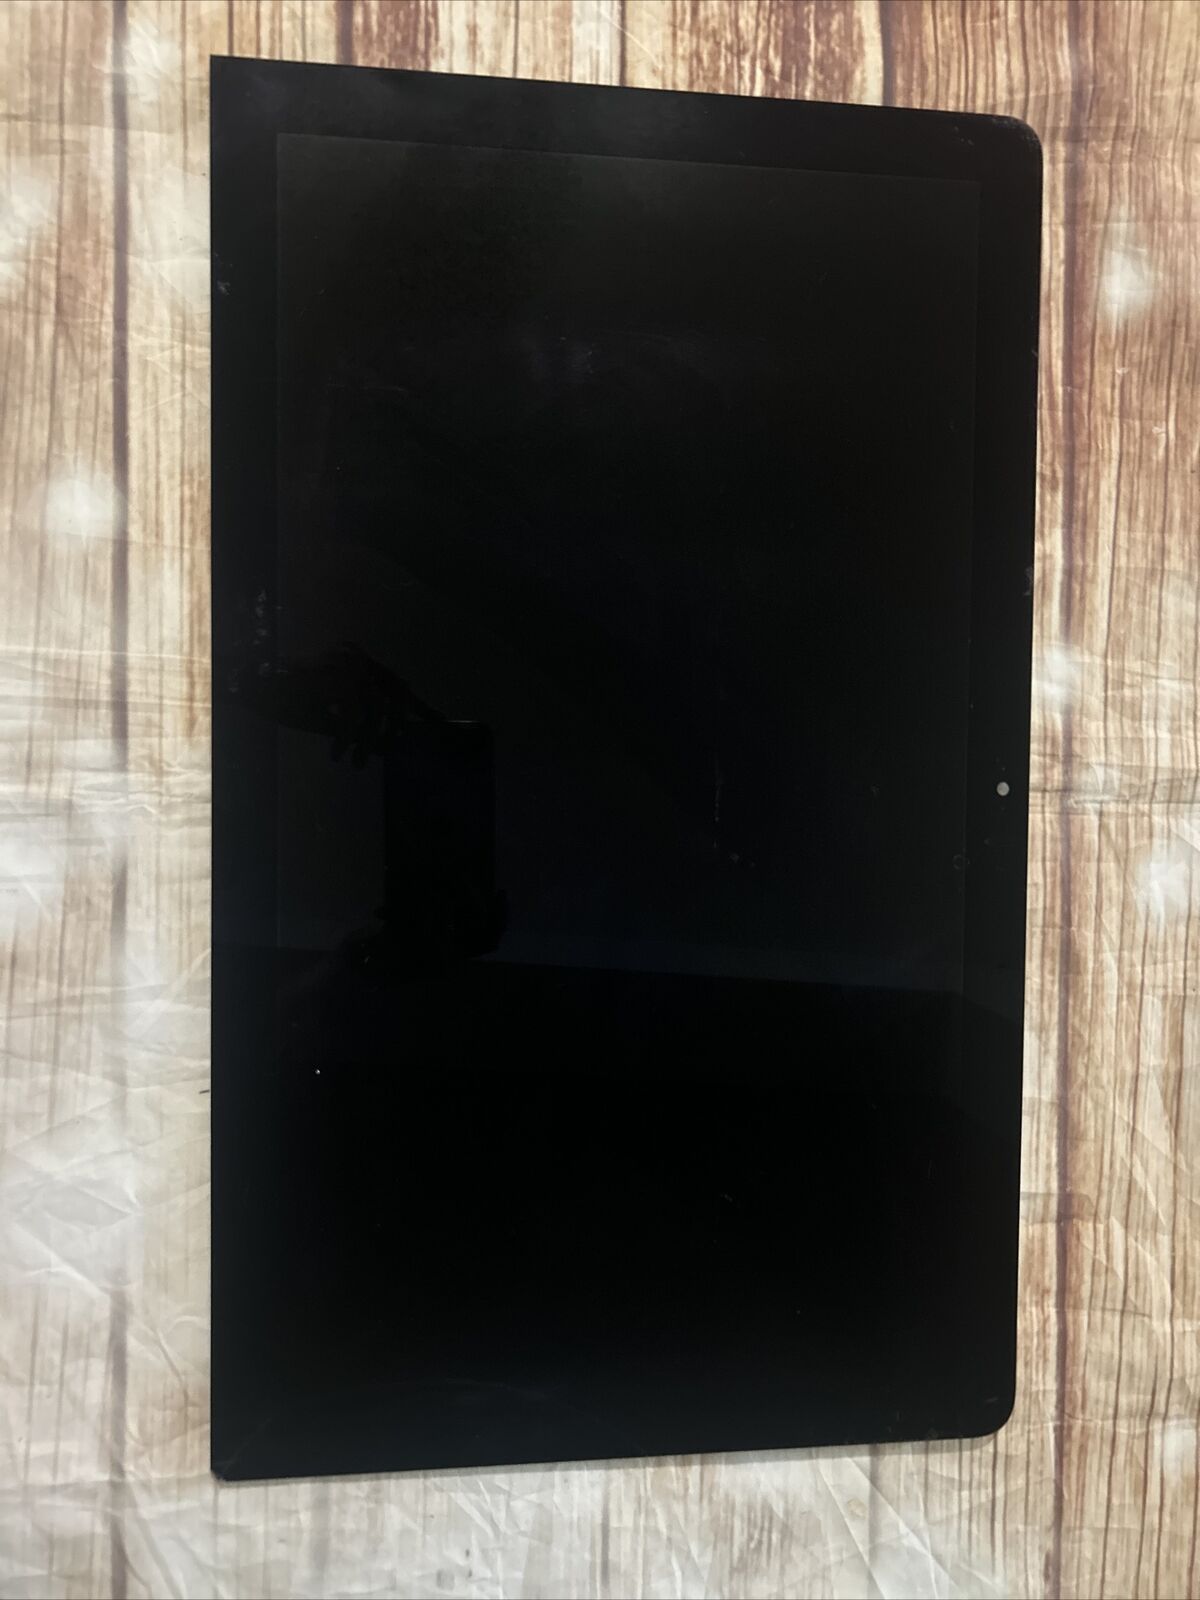 LCD Screen Glass lm215uh1(sd)(B1) for iMac 4k Retina 21.5